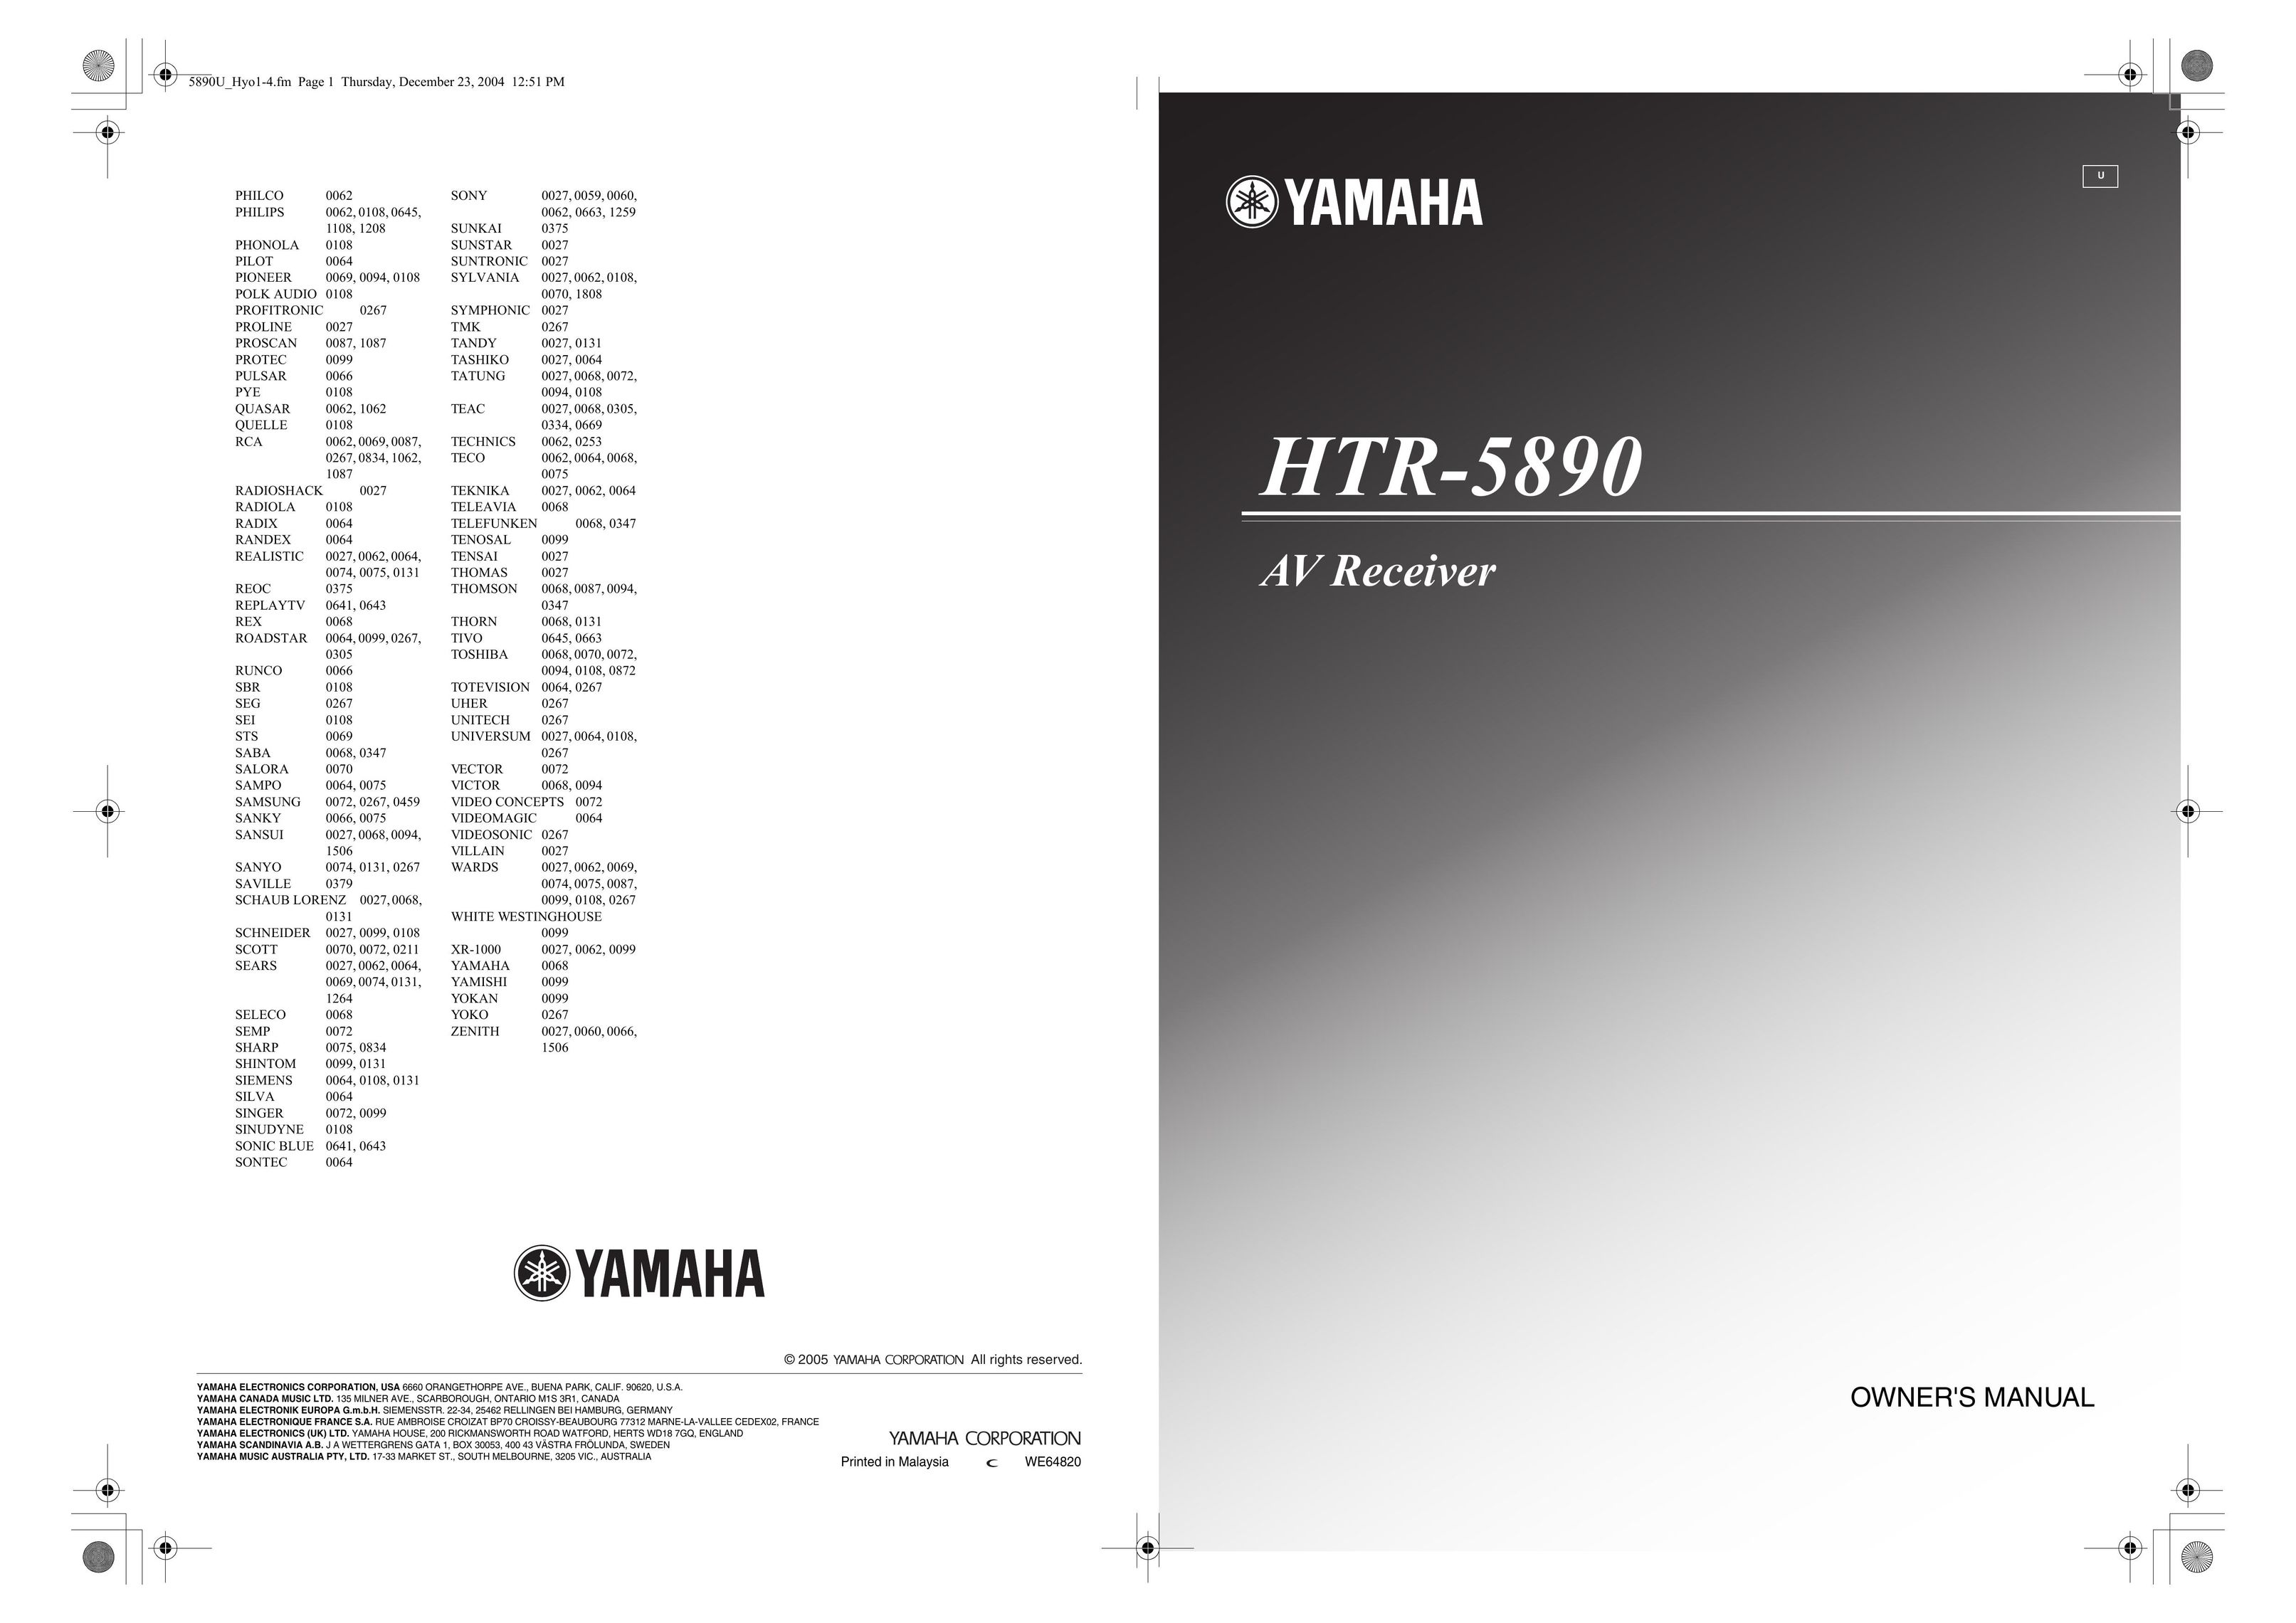 Yamaha htr-5890 Stereo Receiver User Manual